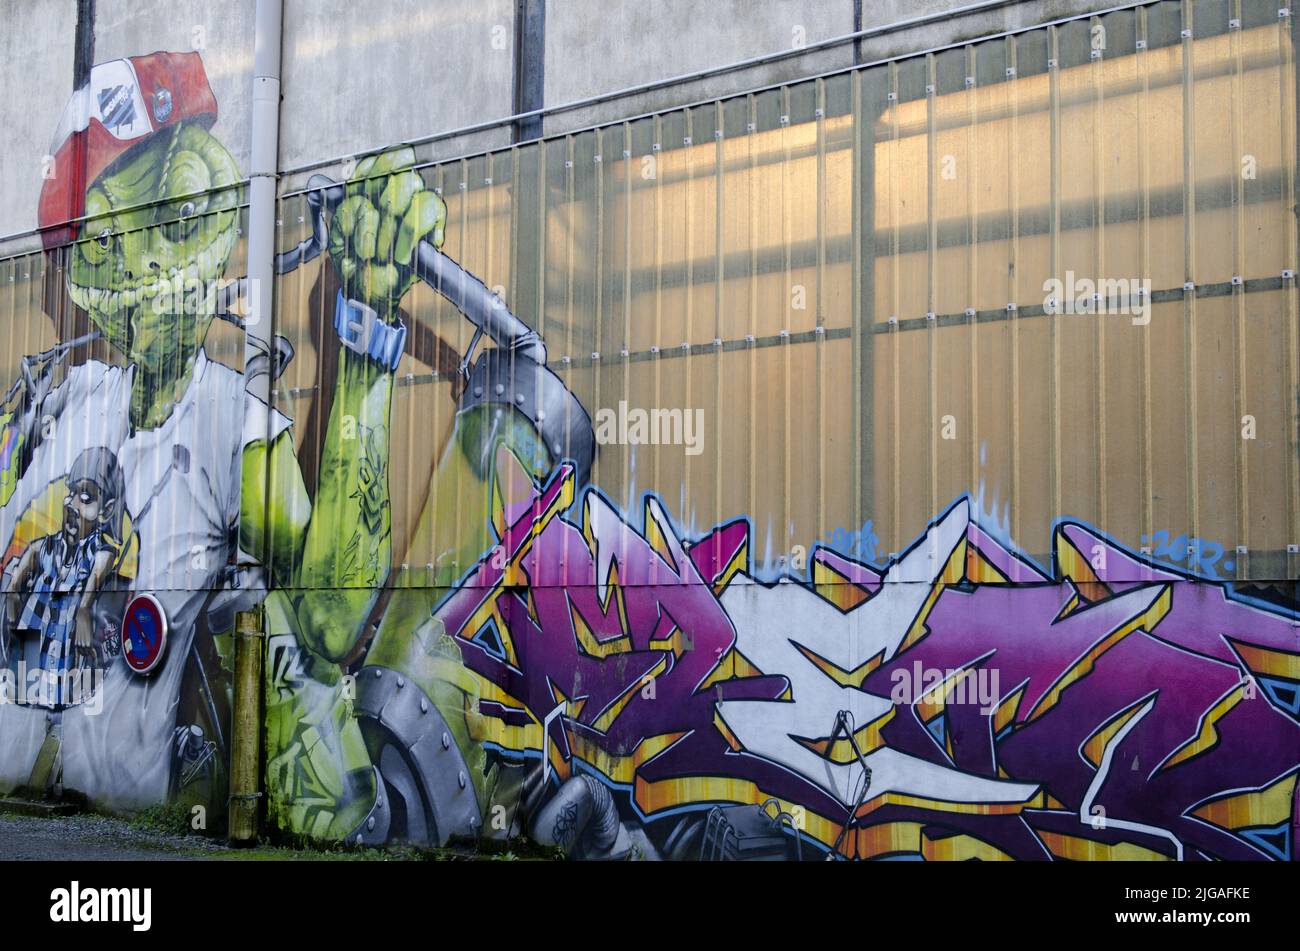 street art in nantes, france Stock Photo